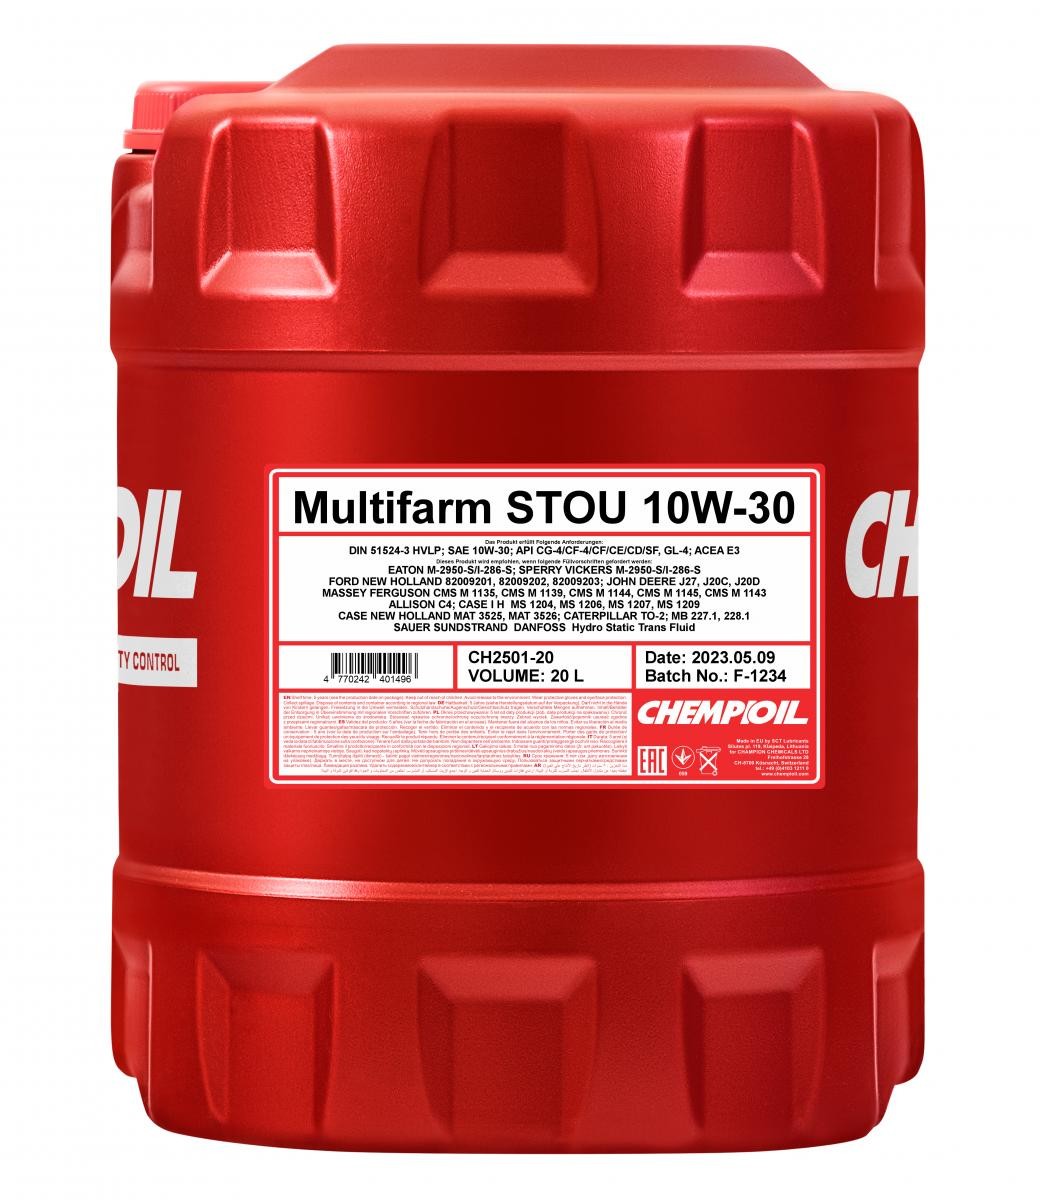 Car oil API GL 4 CHEMPIOIL - CH2501-20 Multifarm, STOU